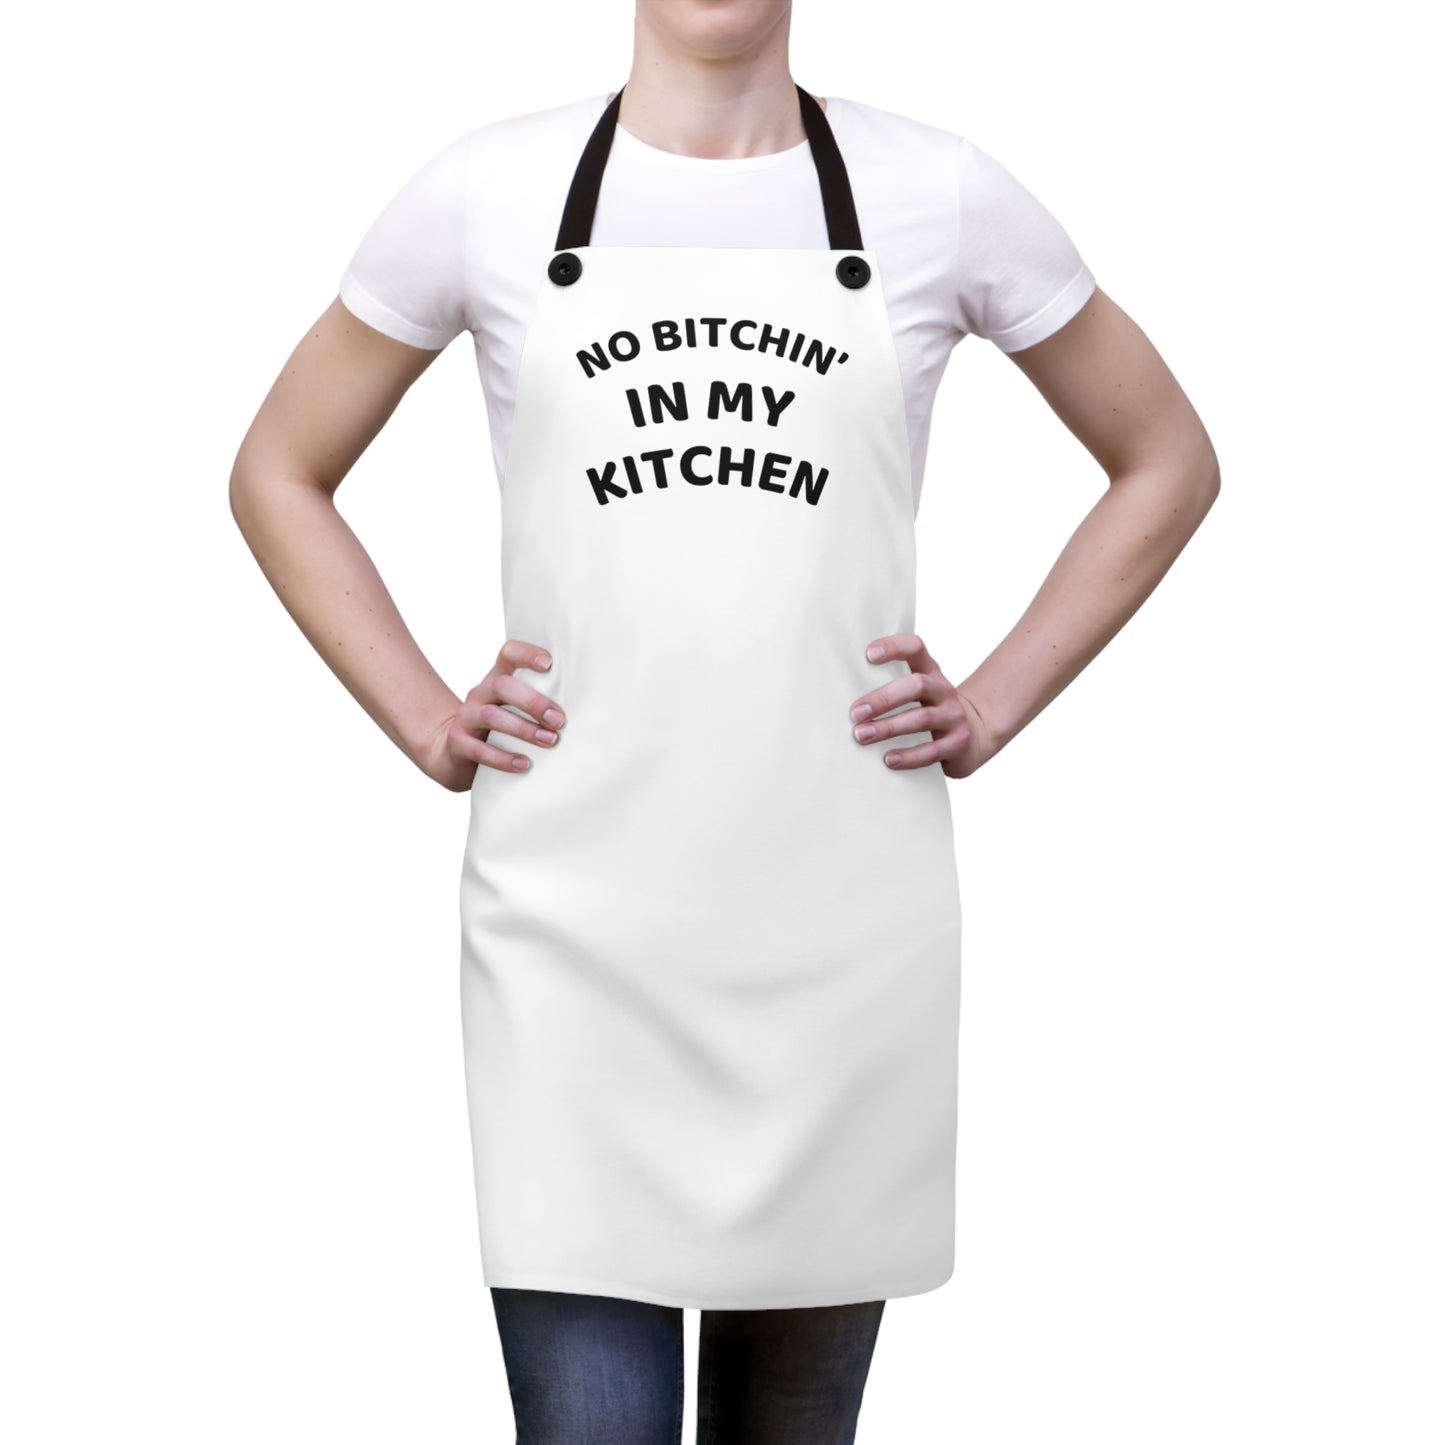 "No Bitchin' in my Kitchen" Apron